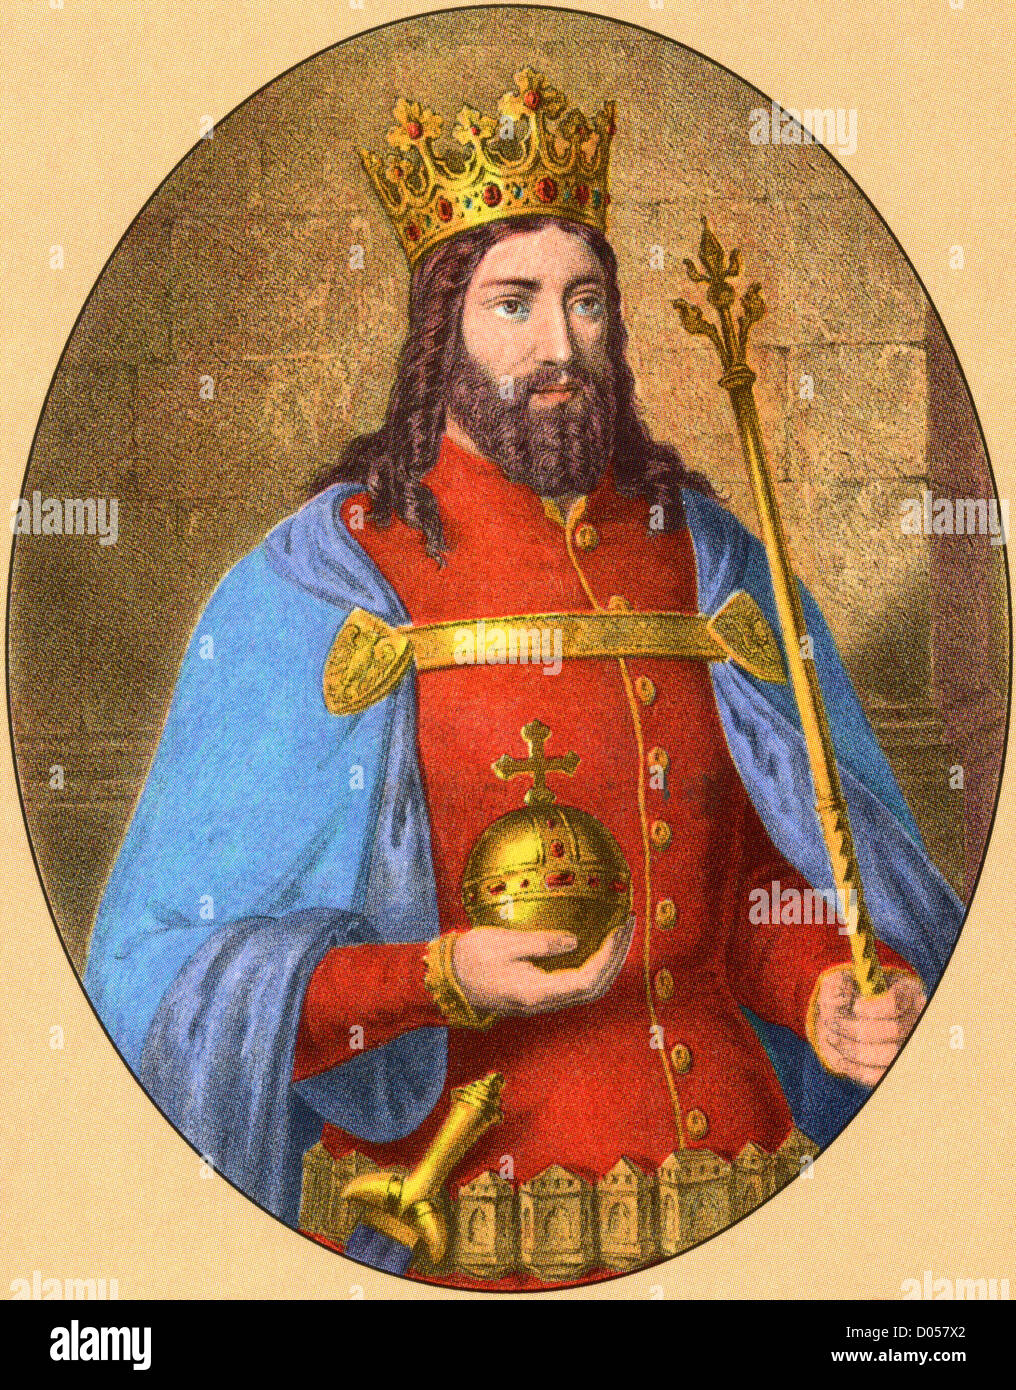 Casimir III le Grand AKA Kazimierz Wielki (1310-1370), le dernier roi